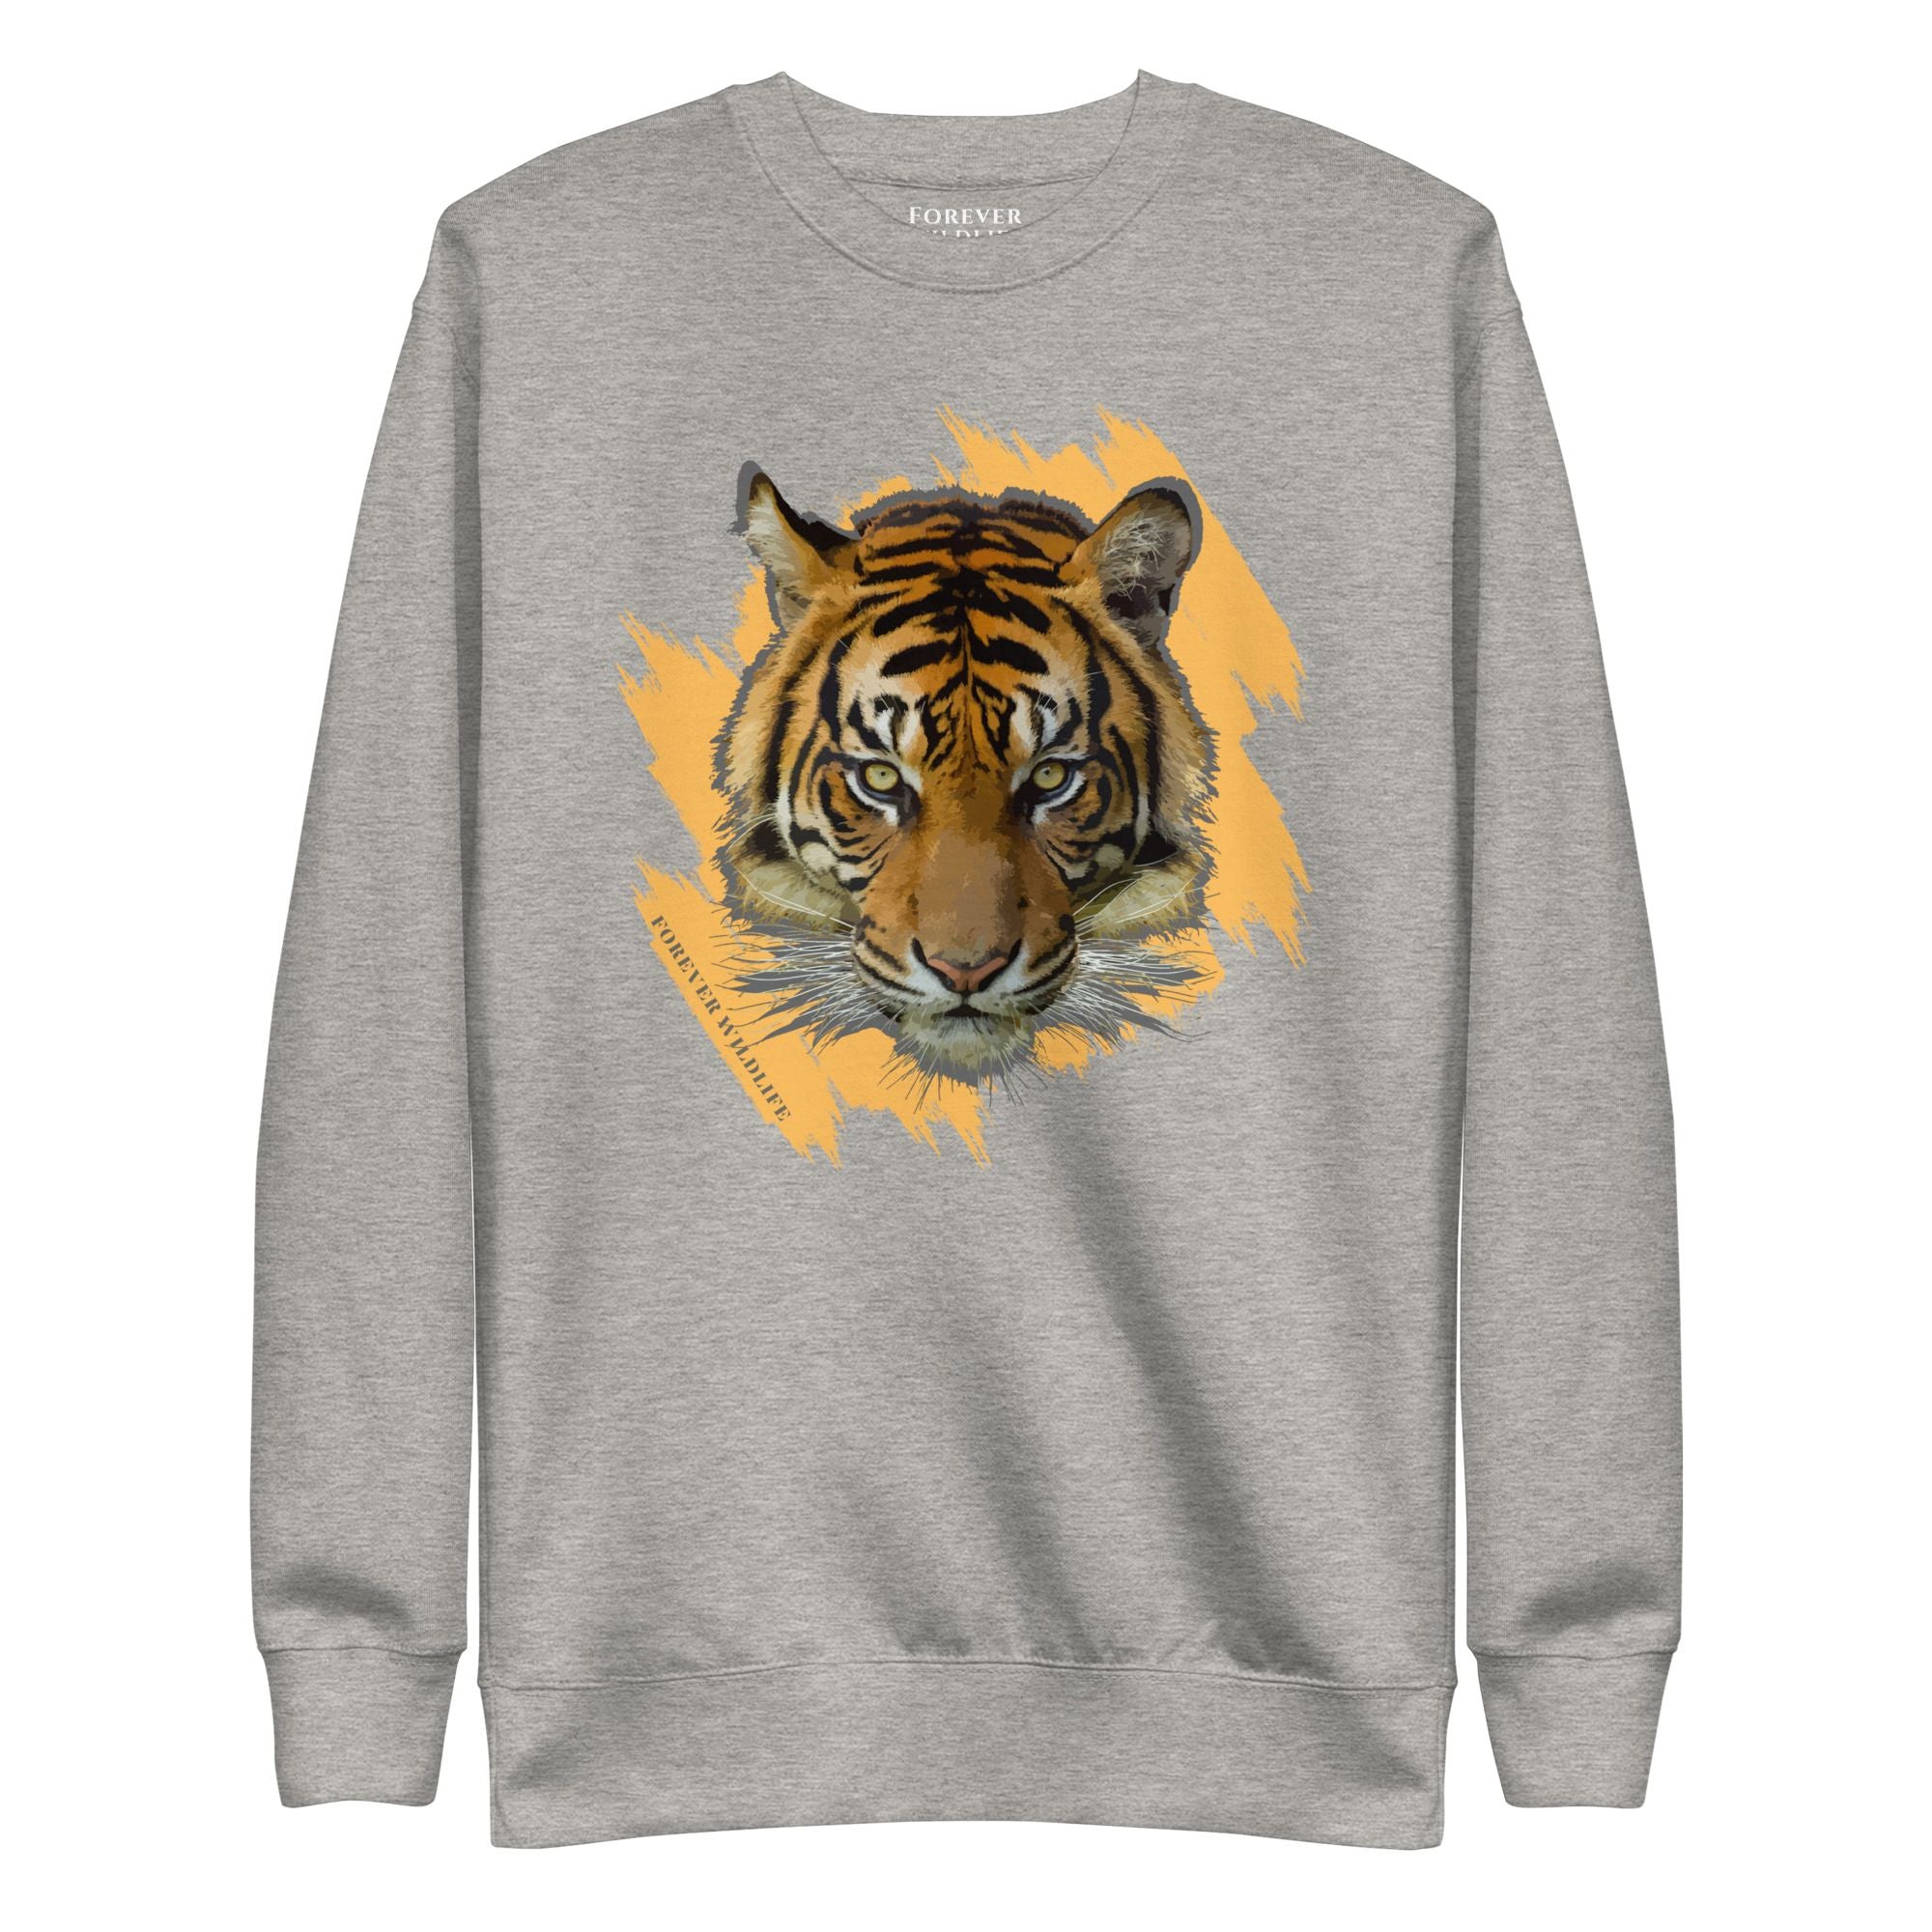 Tiger Sweatshirt in Grey-Premium Wildlife Animal Inspiration Sweatshirt Design, part of Wildlife Sweatshirts & Clothing from Forever Wildlife.